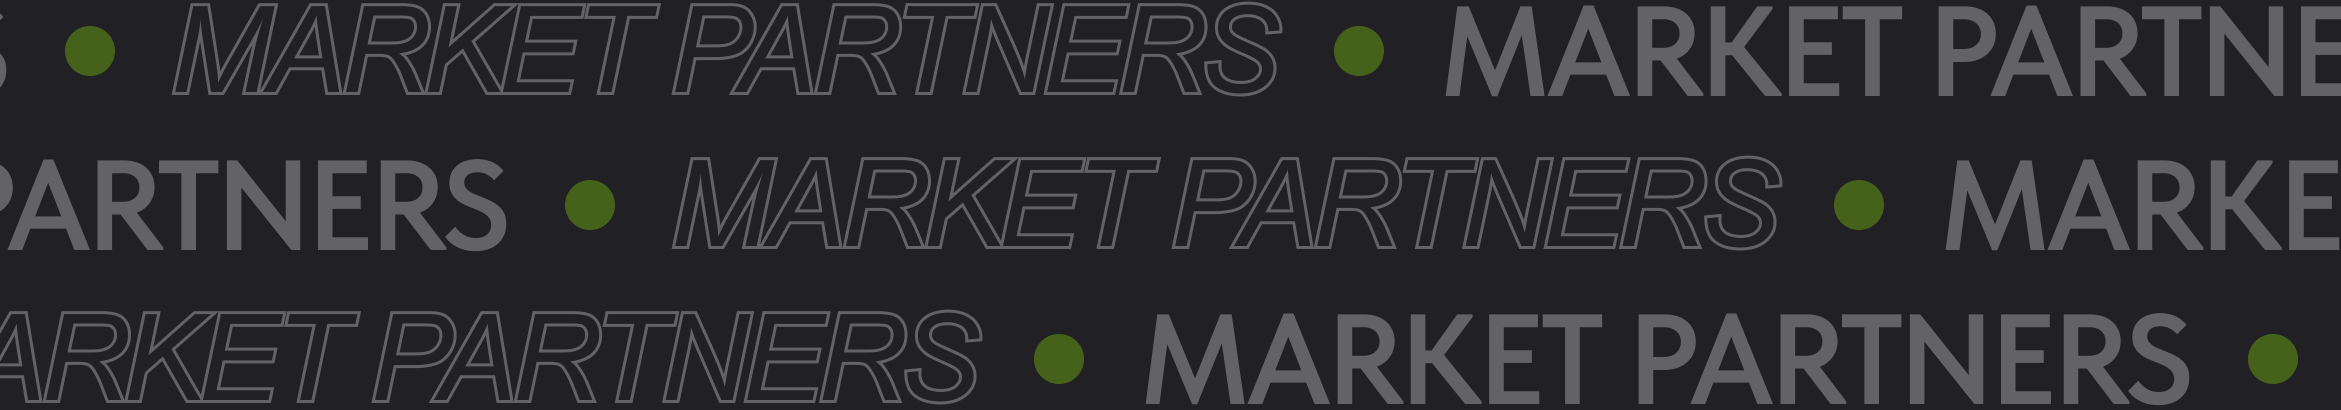 MARKET PARTNERS's profile banner